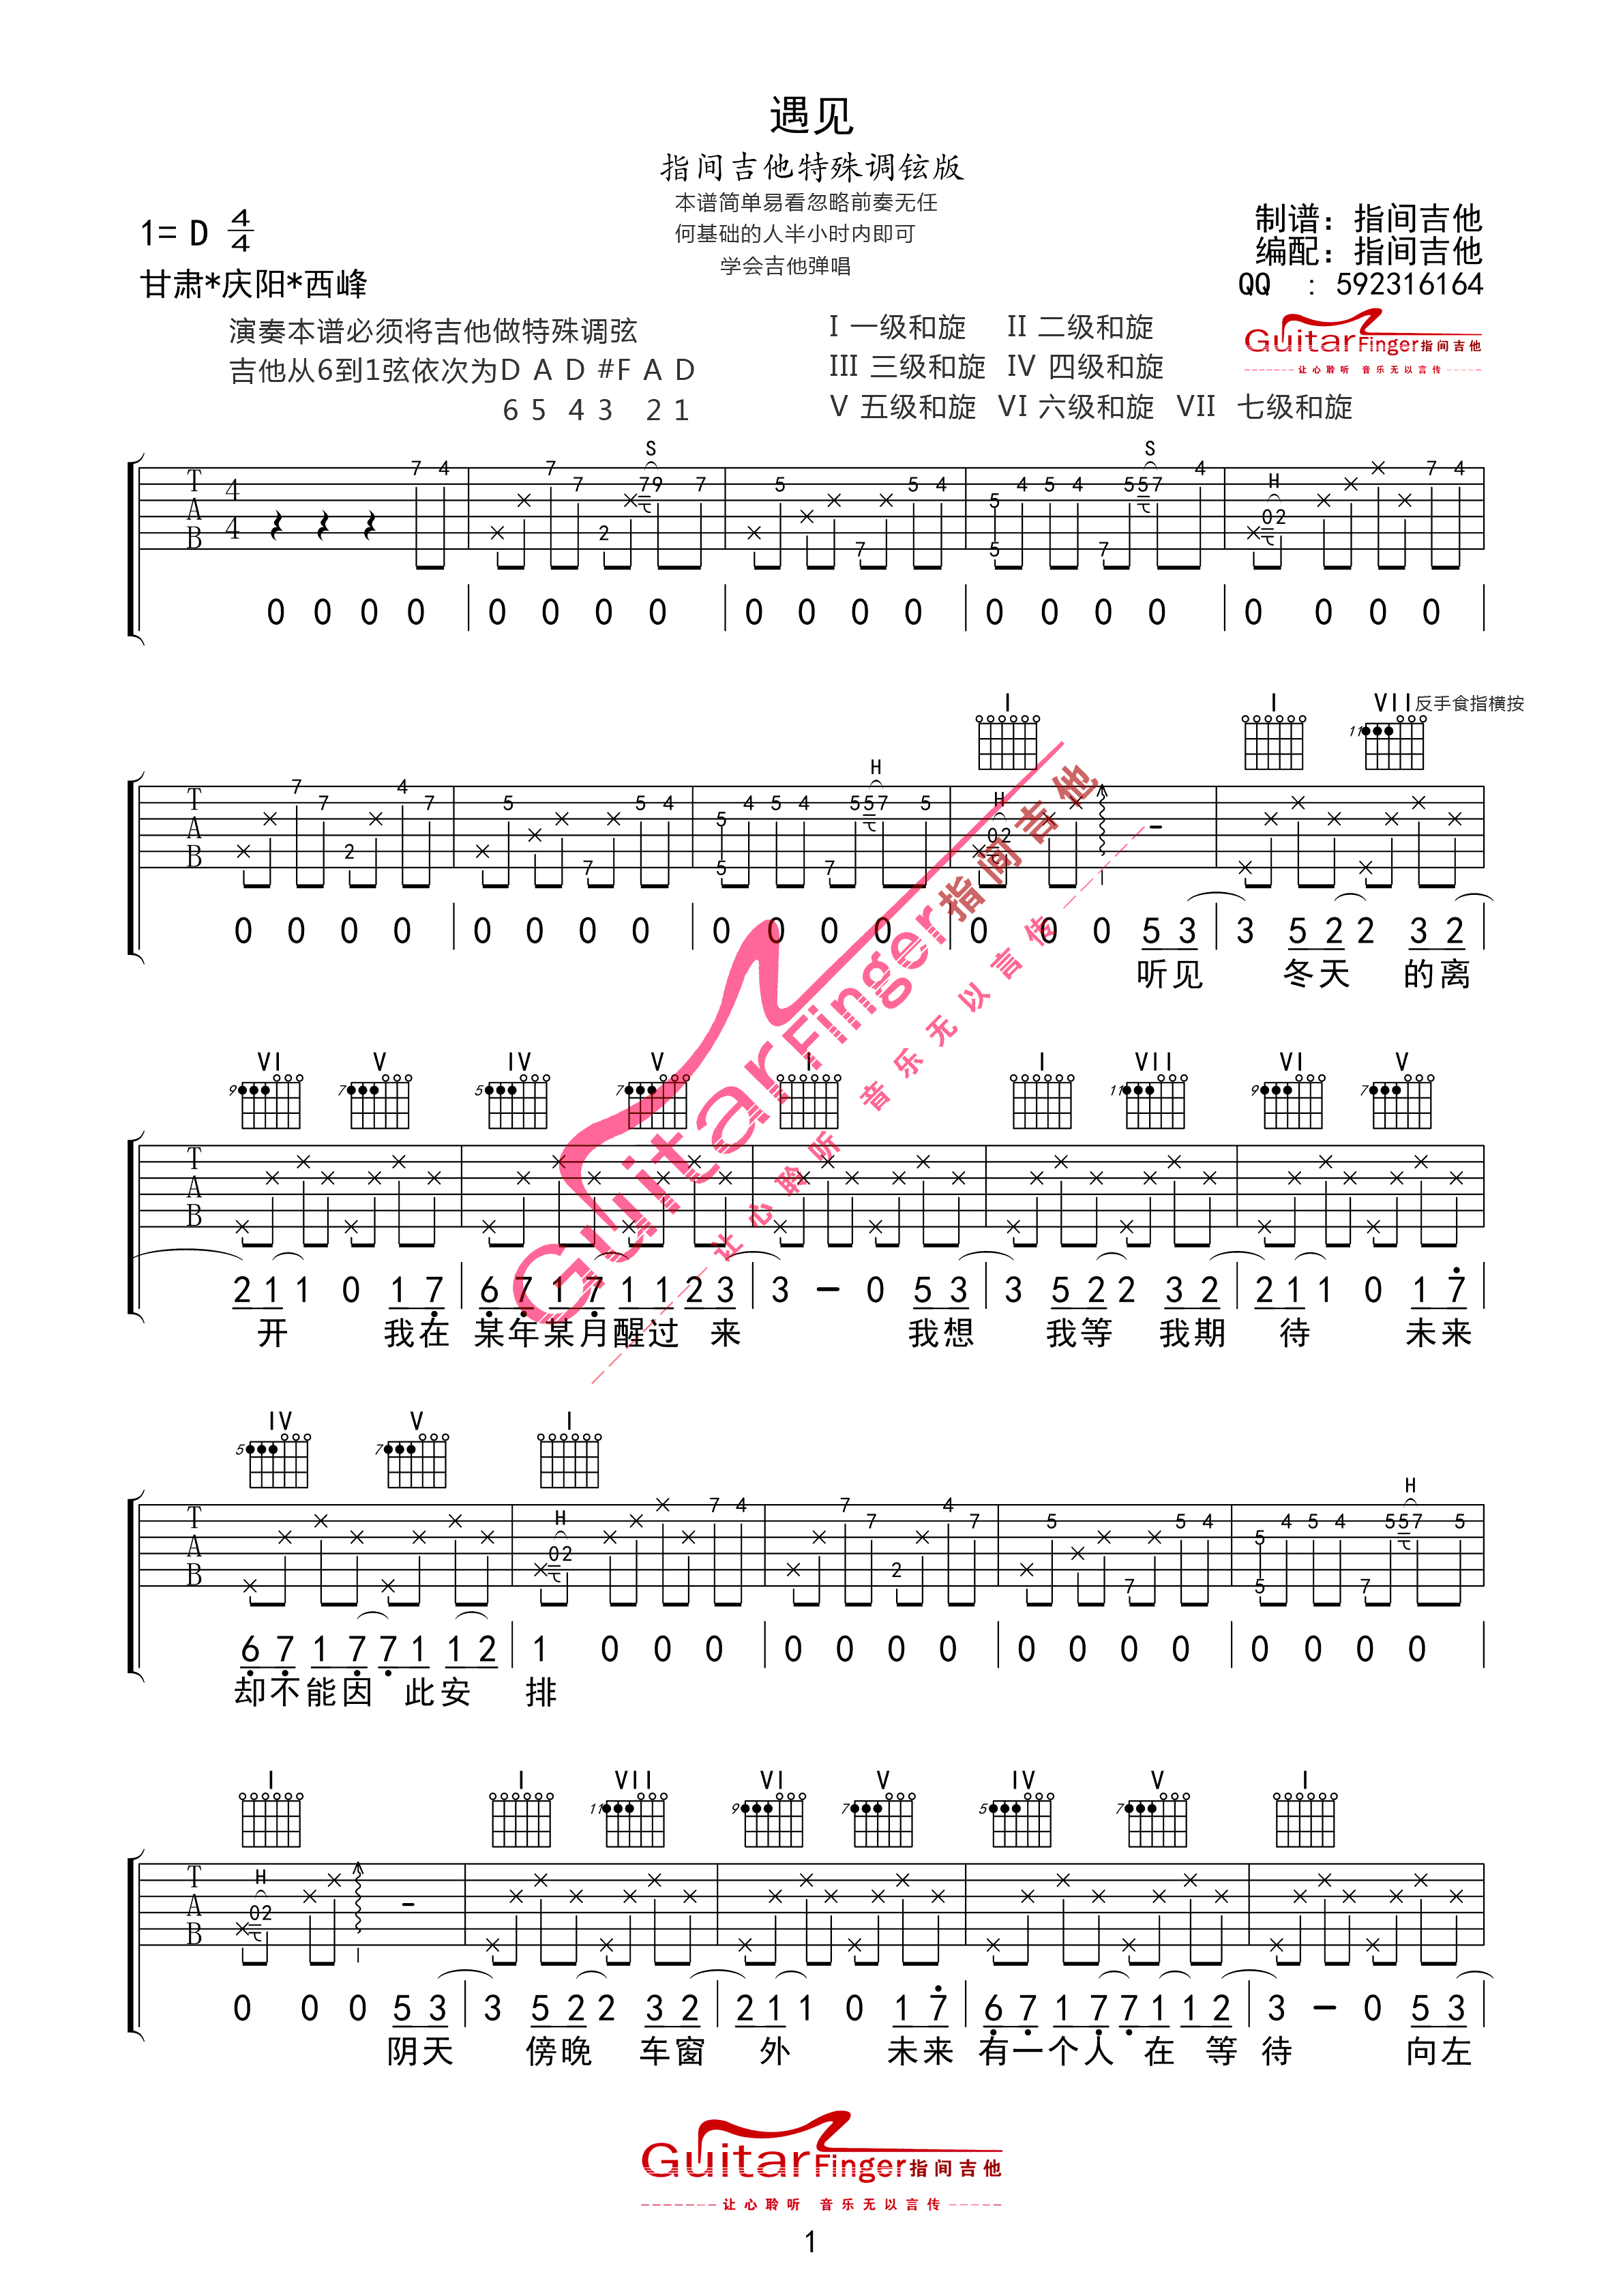 Venus吉他谱 - 孙燕姿 - G调吉他弹唱谱 - 完整编配版 - 琴谱网